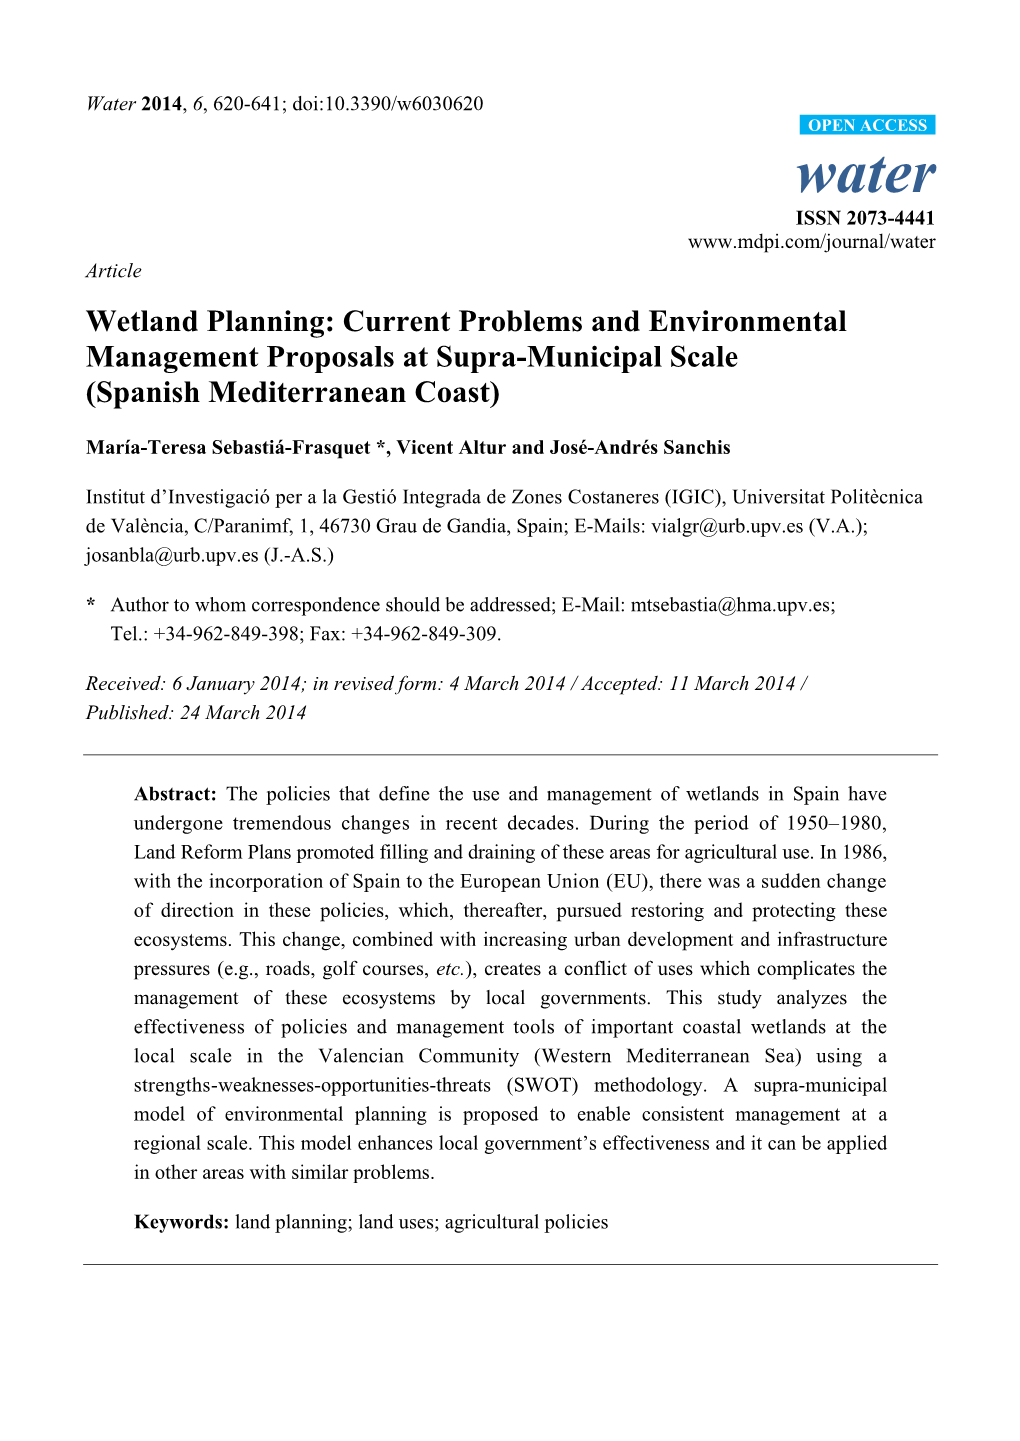 Wetland Planning: Current Problems and Environmental Management Proposals at Supra-Municipal Scale (Spanish Mediterranean Coast)